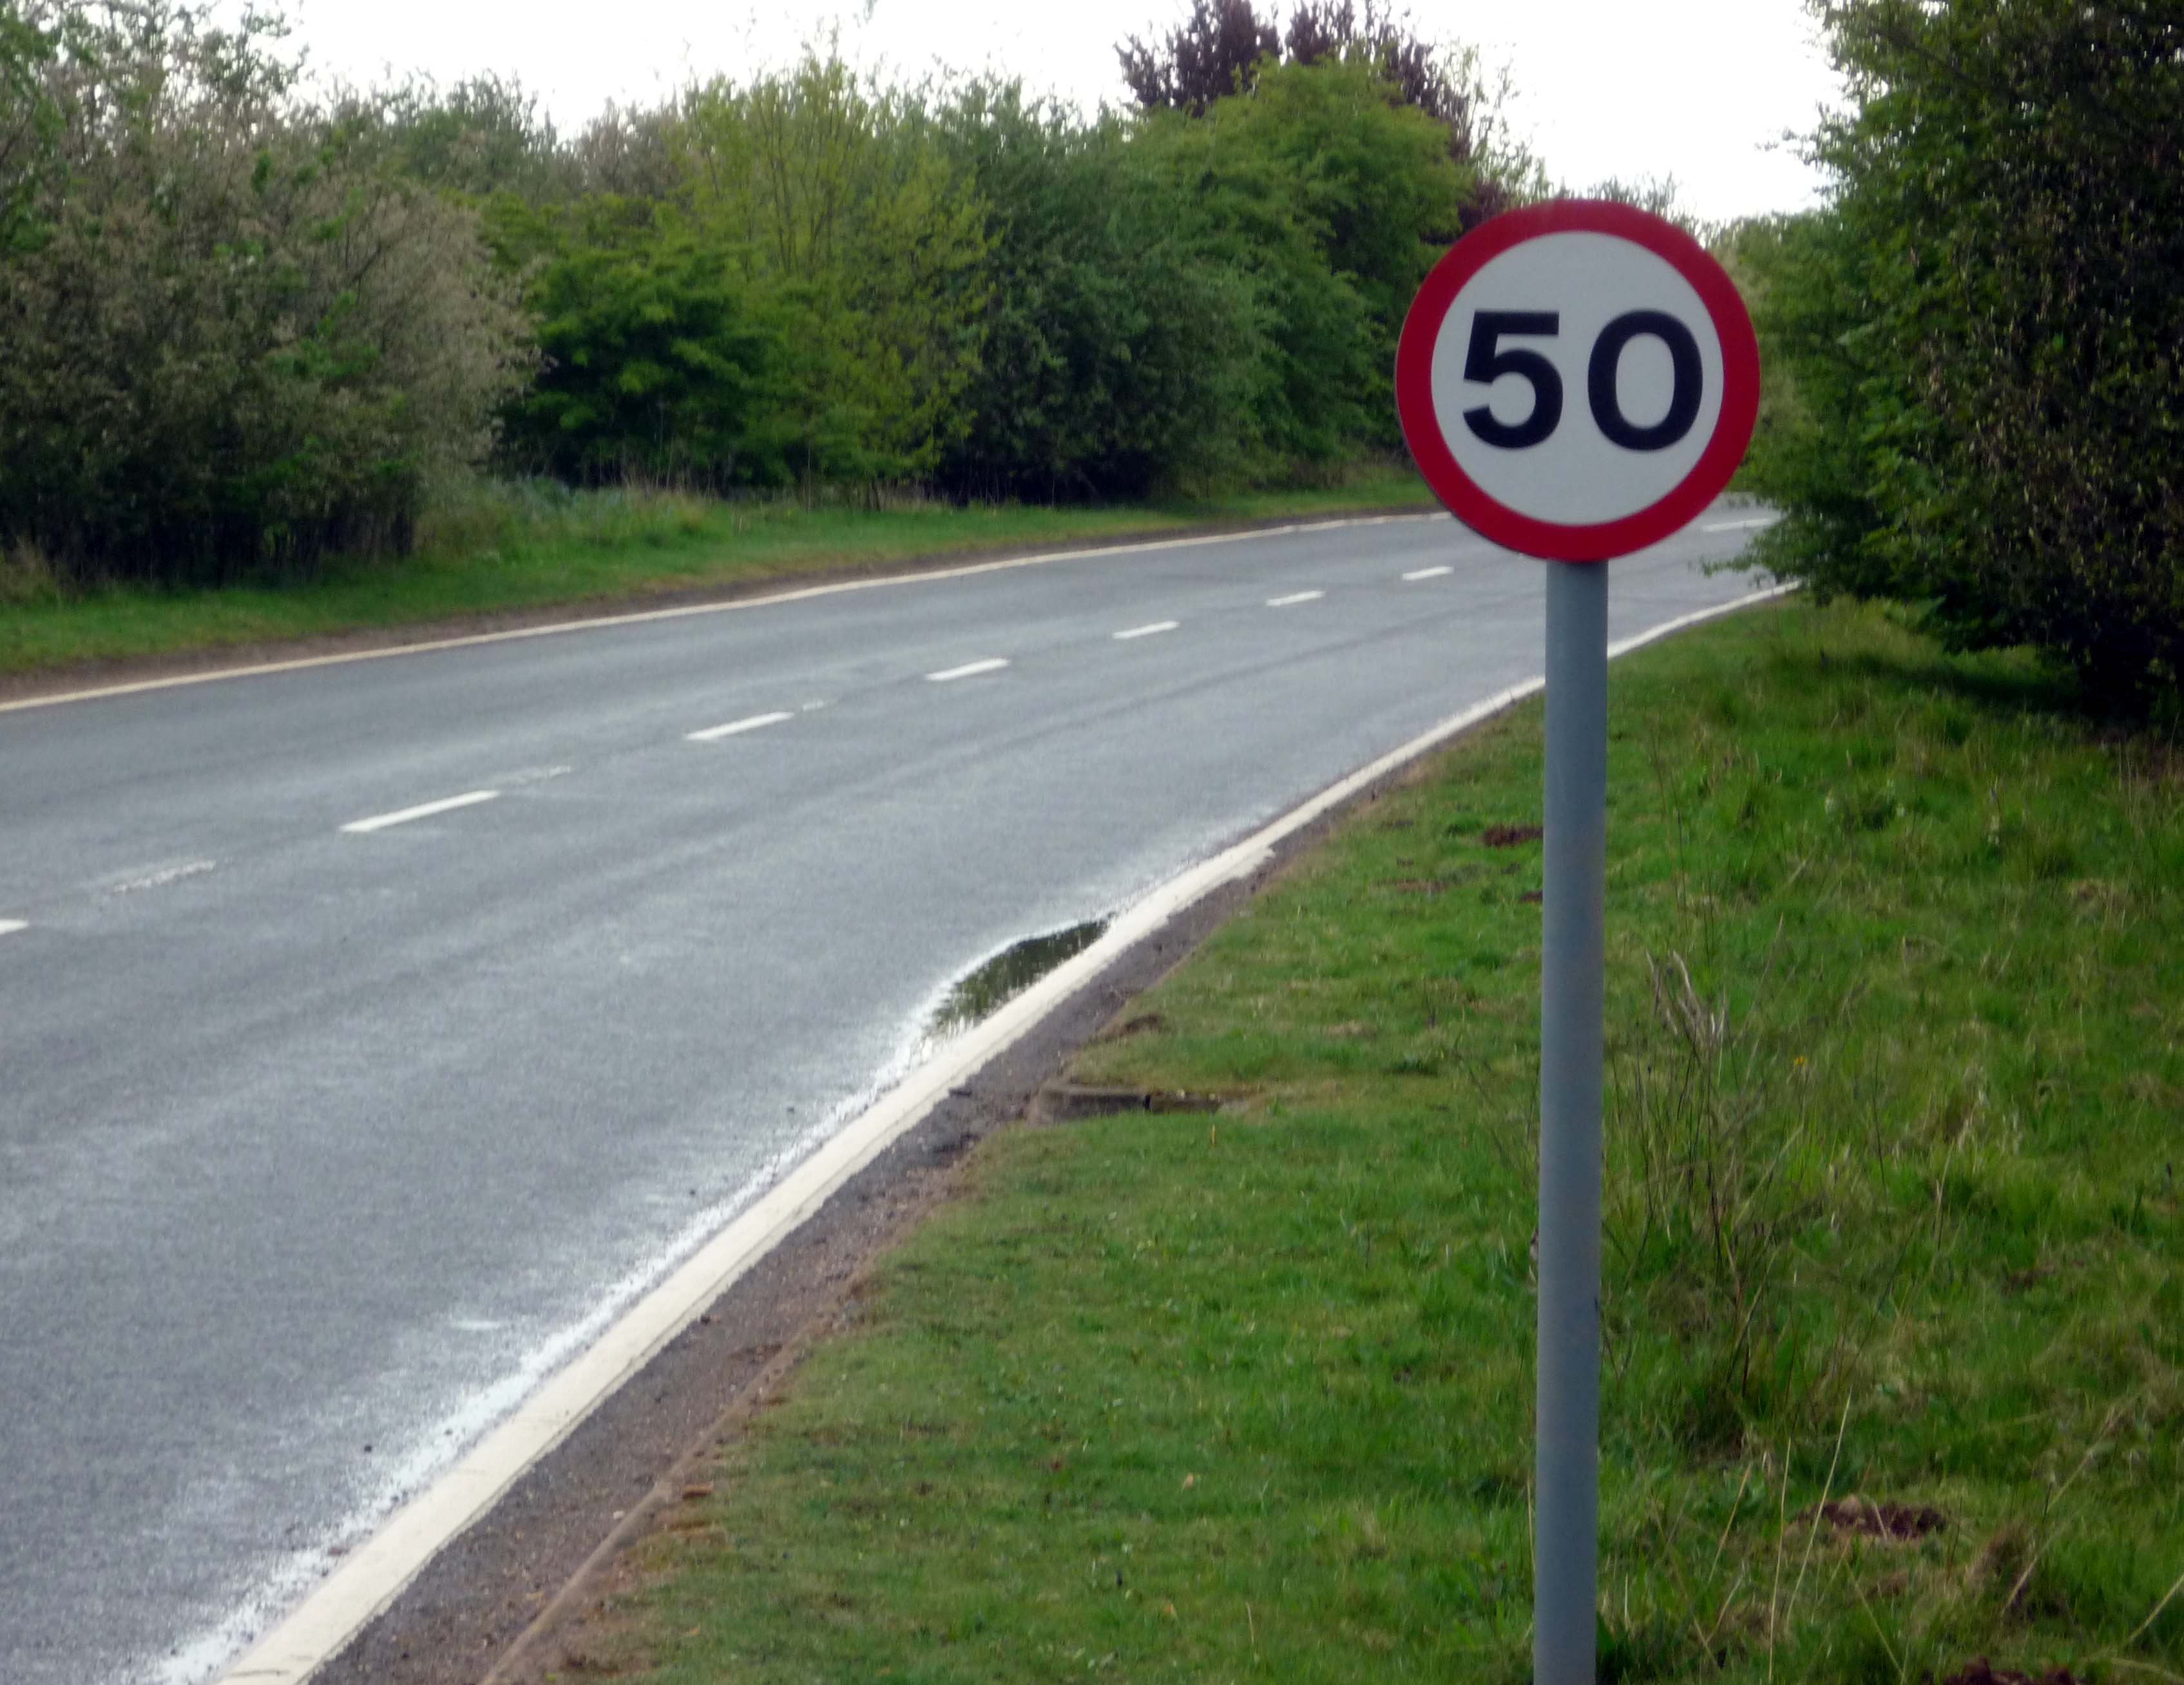 Road limit. Знаки на дороге. Знак ограничения скорости на дороге. Дорожные знаки на автодороге. Дорожный знак скорость 50.